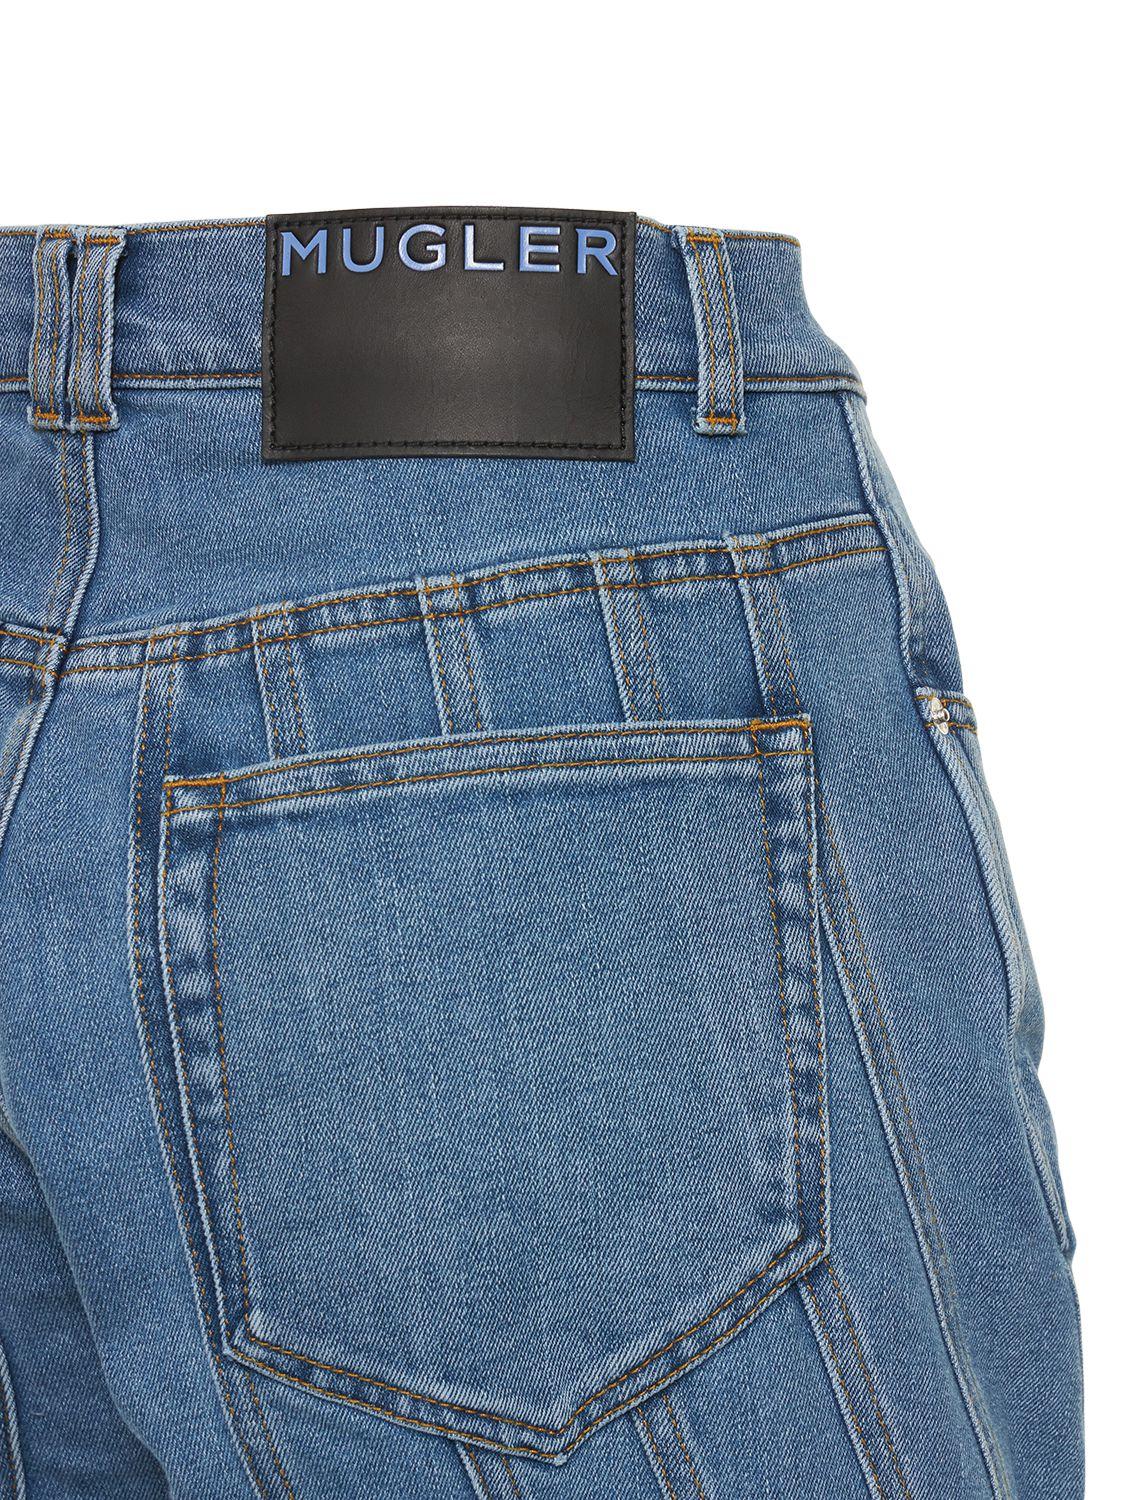 Mugler Denim Low Waist Baggy Spiral Jeans in Blue | Lyst